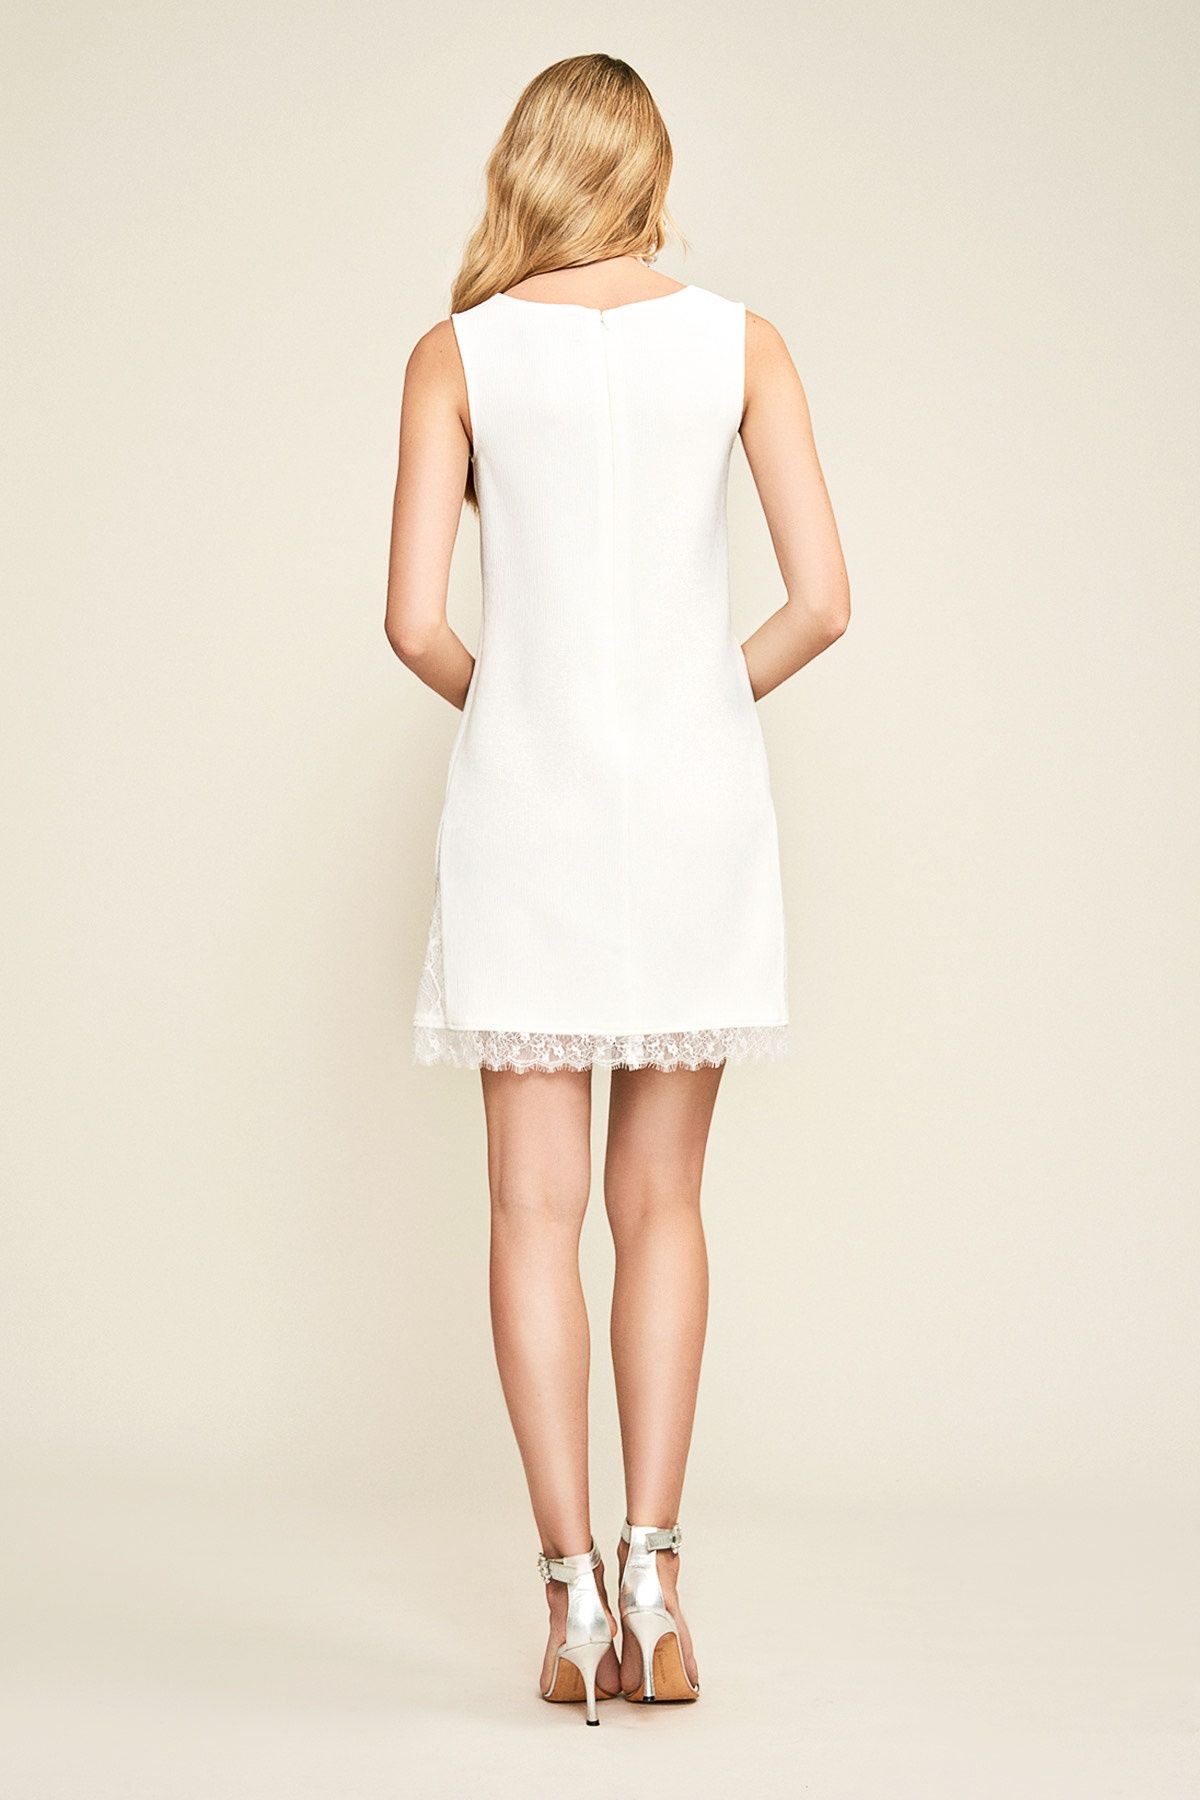 Style AXB17321SBR-IVORY Tadashi Shoji Size XS Wedding Plunge Lace White Cocktail Dress on Queenly